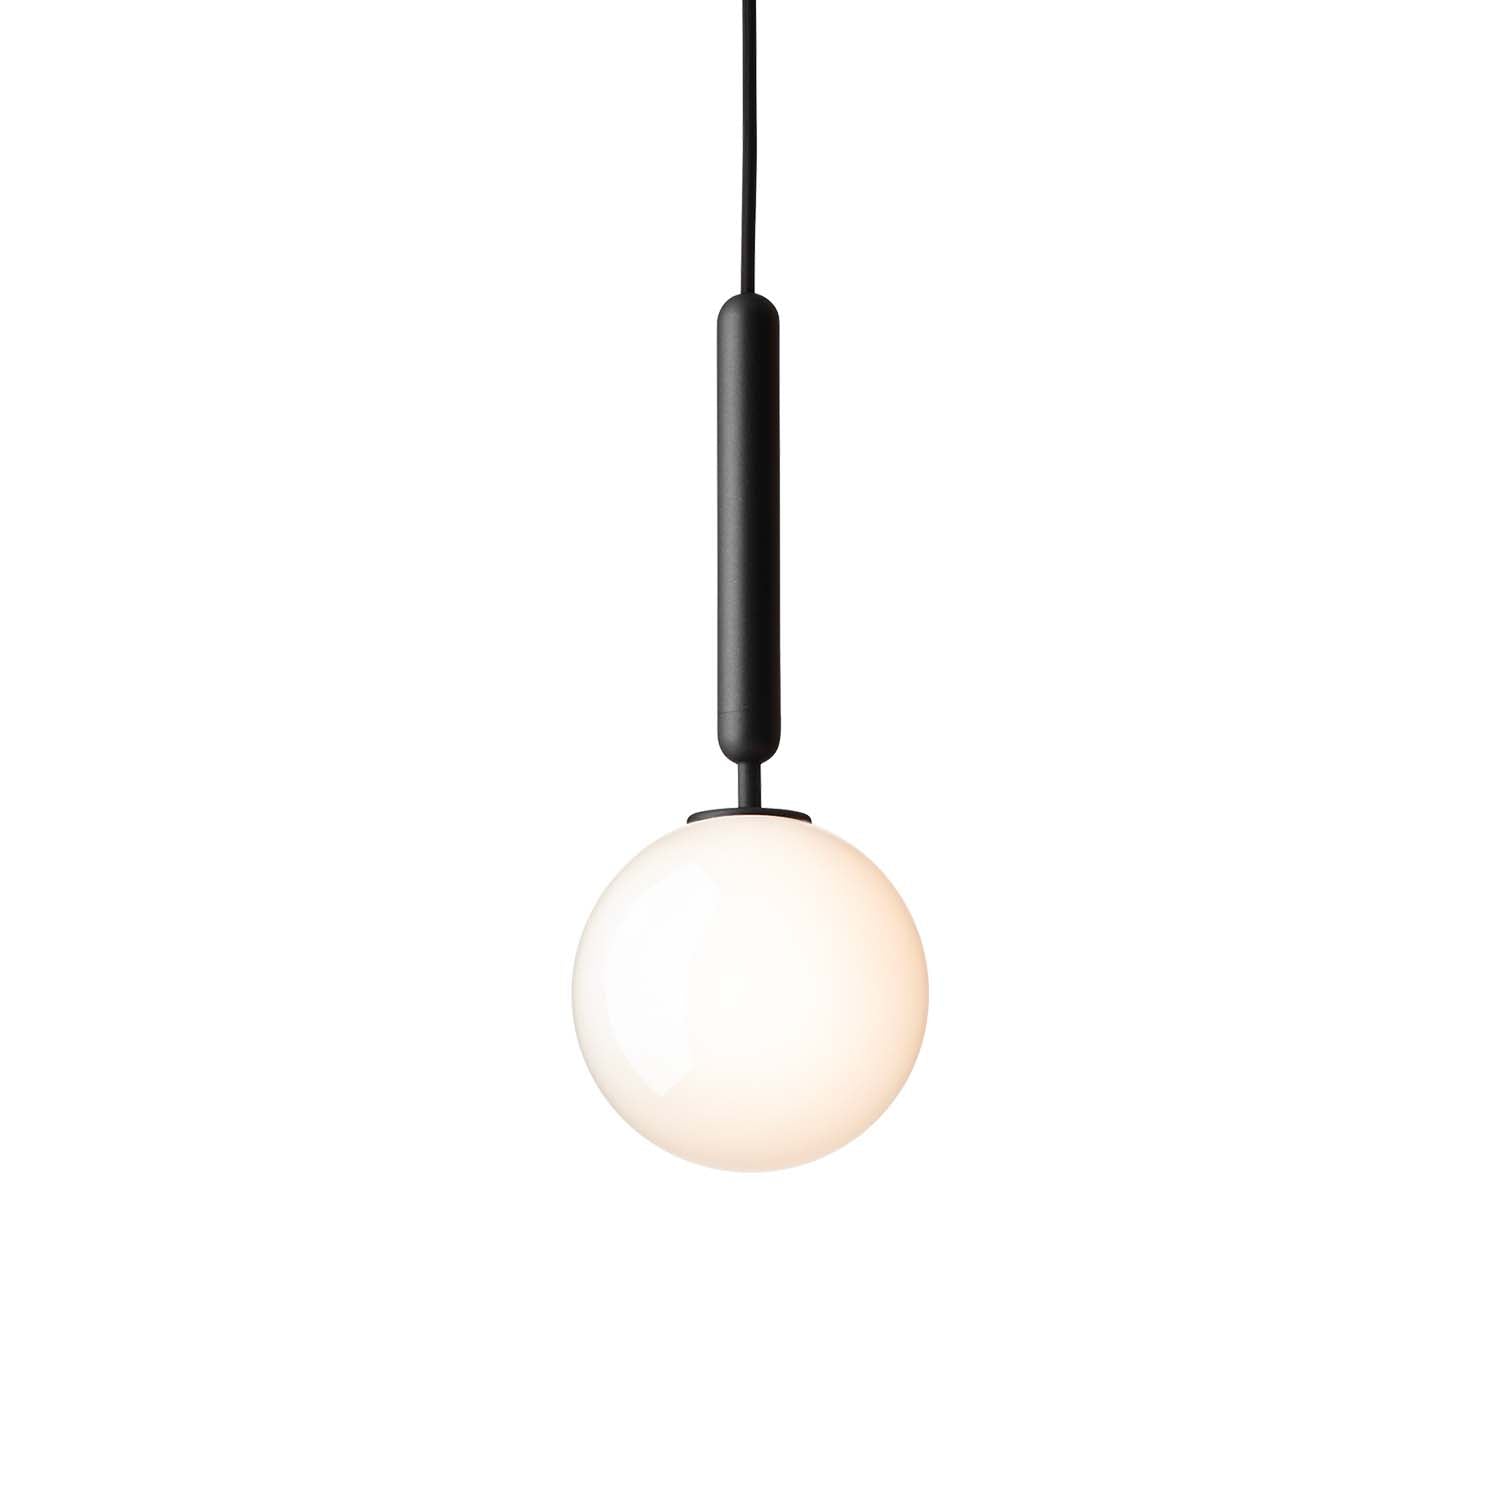 MIIRA 1 Opal - Elegant and minimalist pendant lamp, gold or black